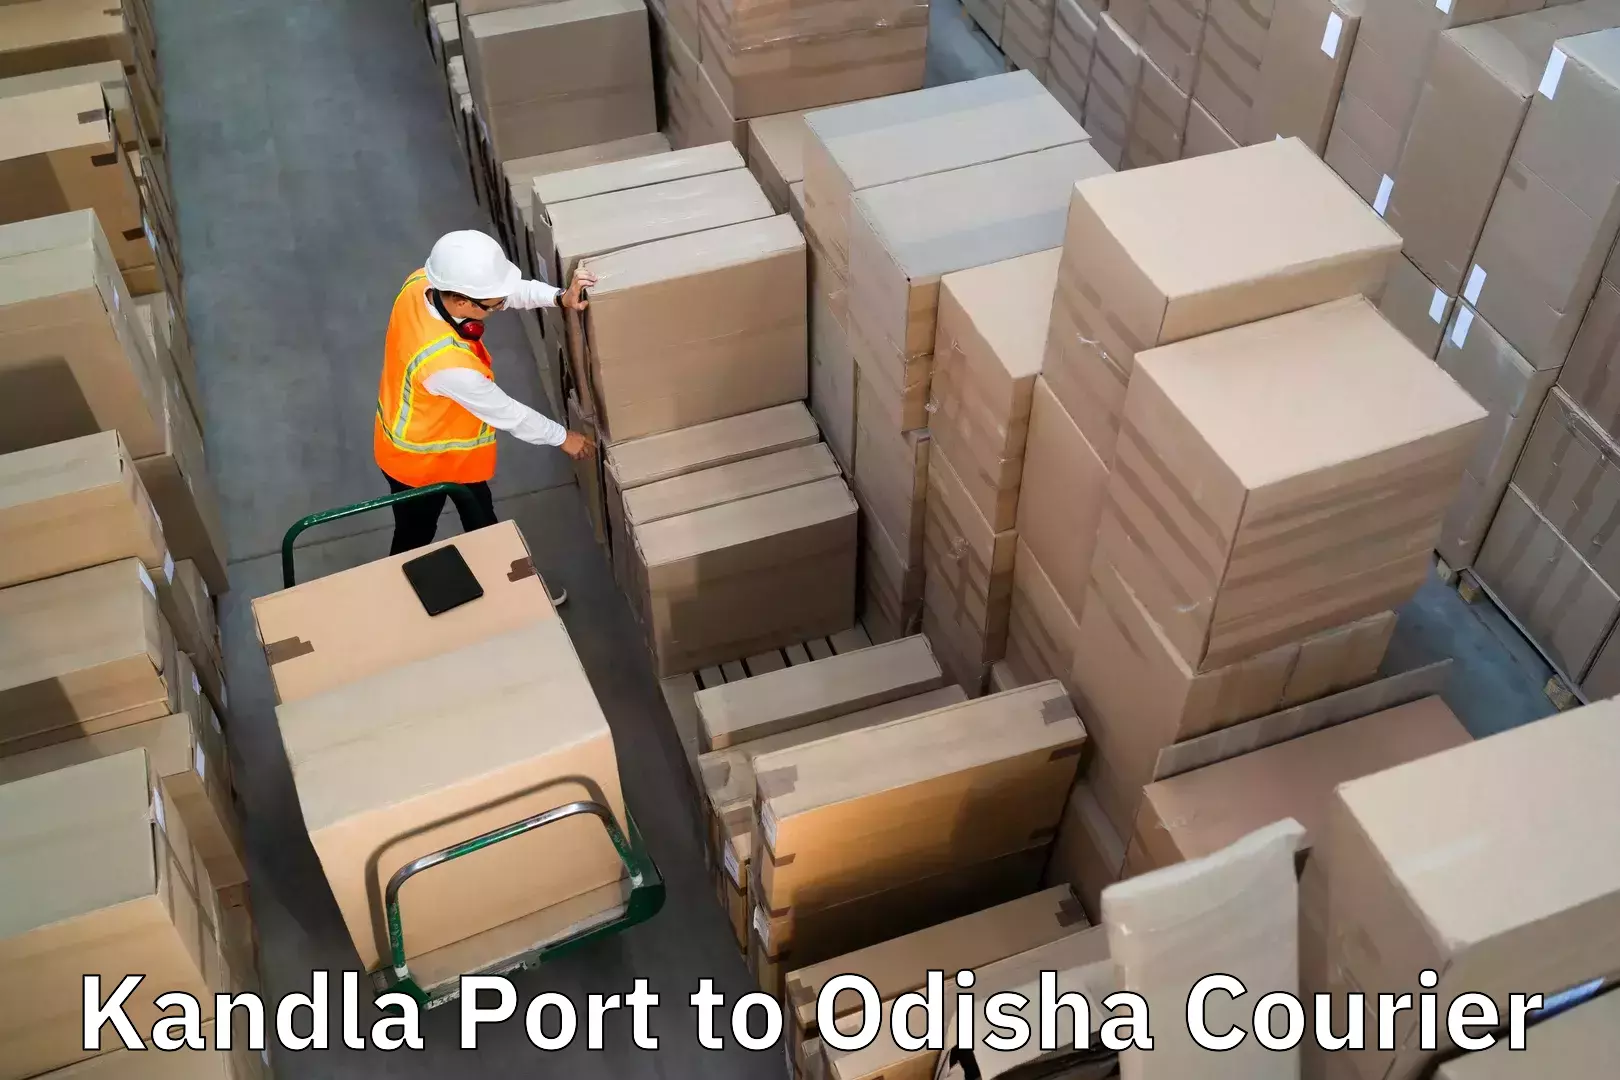 Luggage shipment specialists Kandla Port to Karanjia